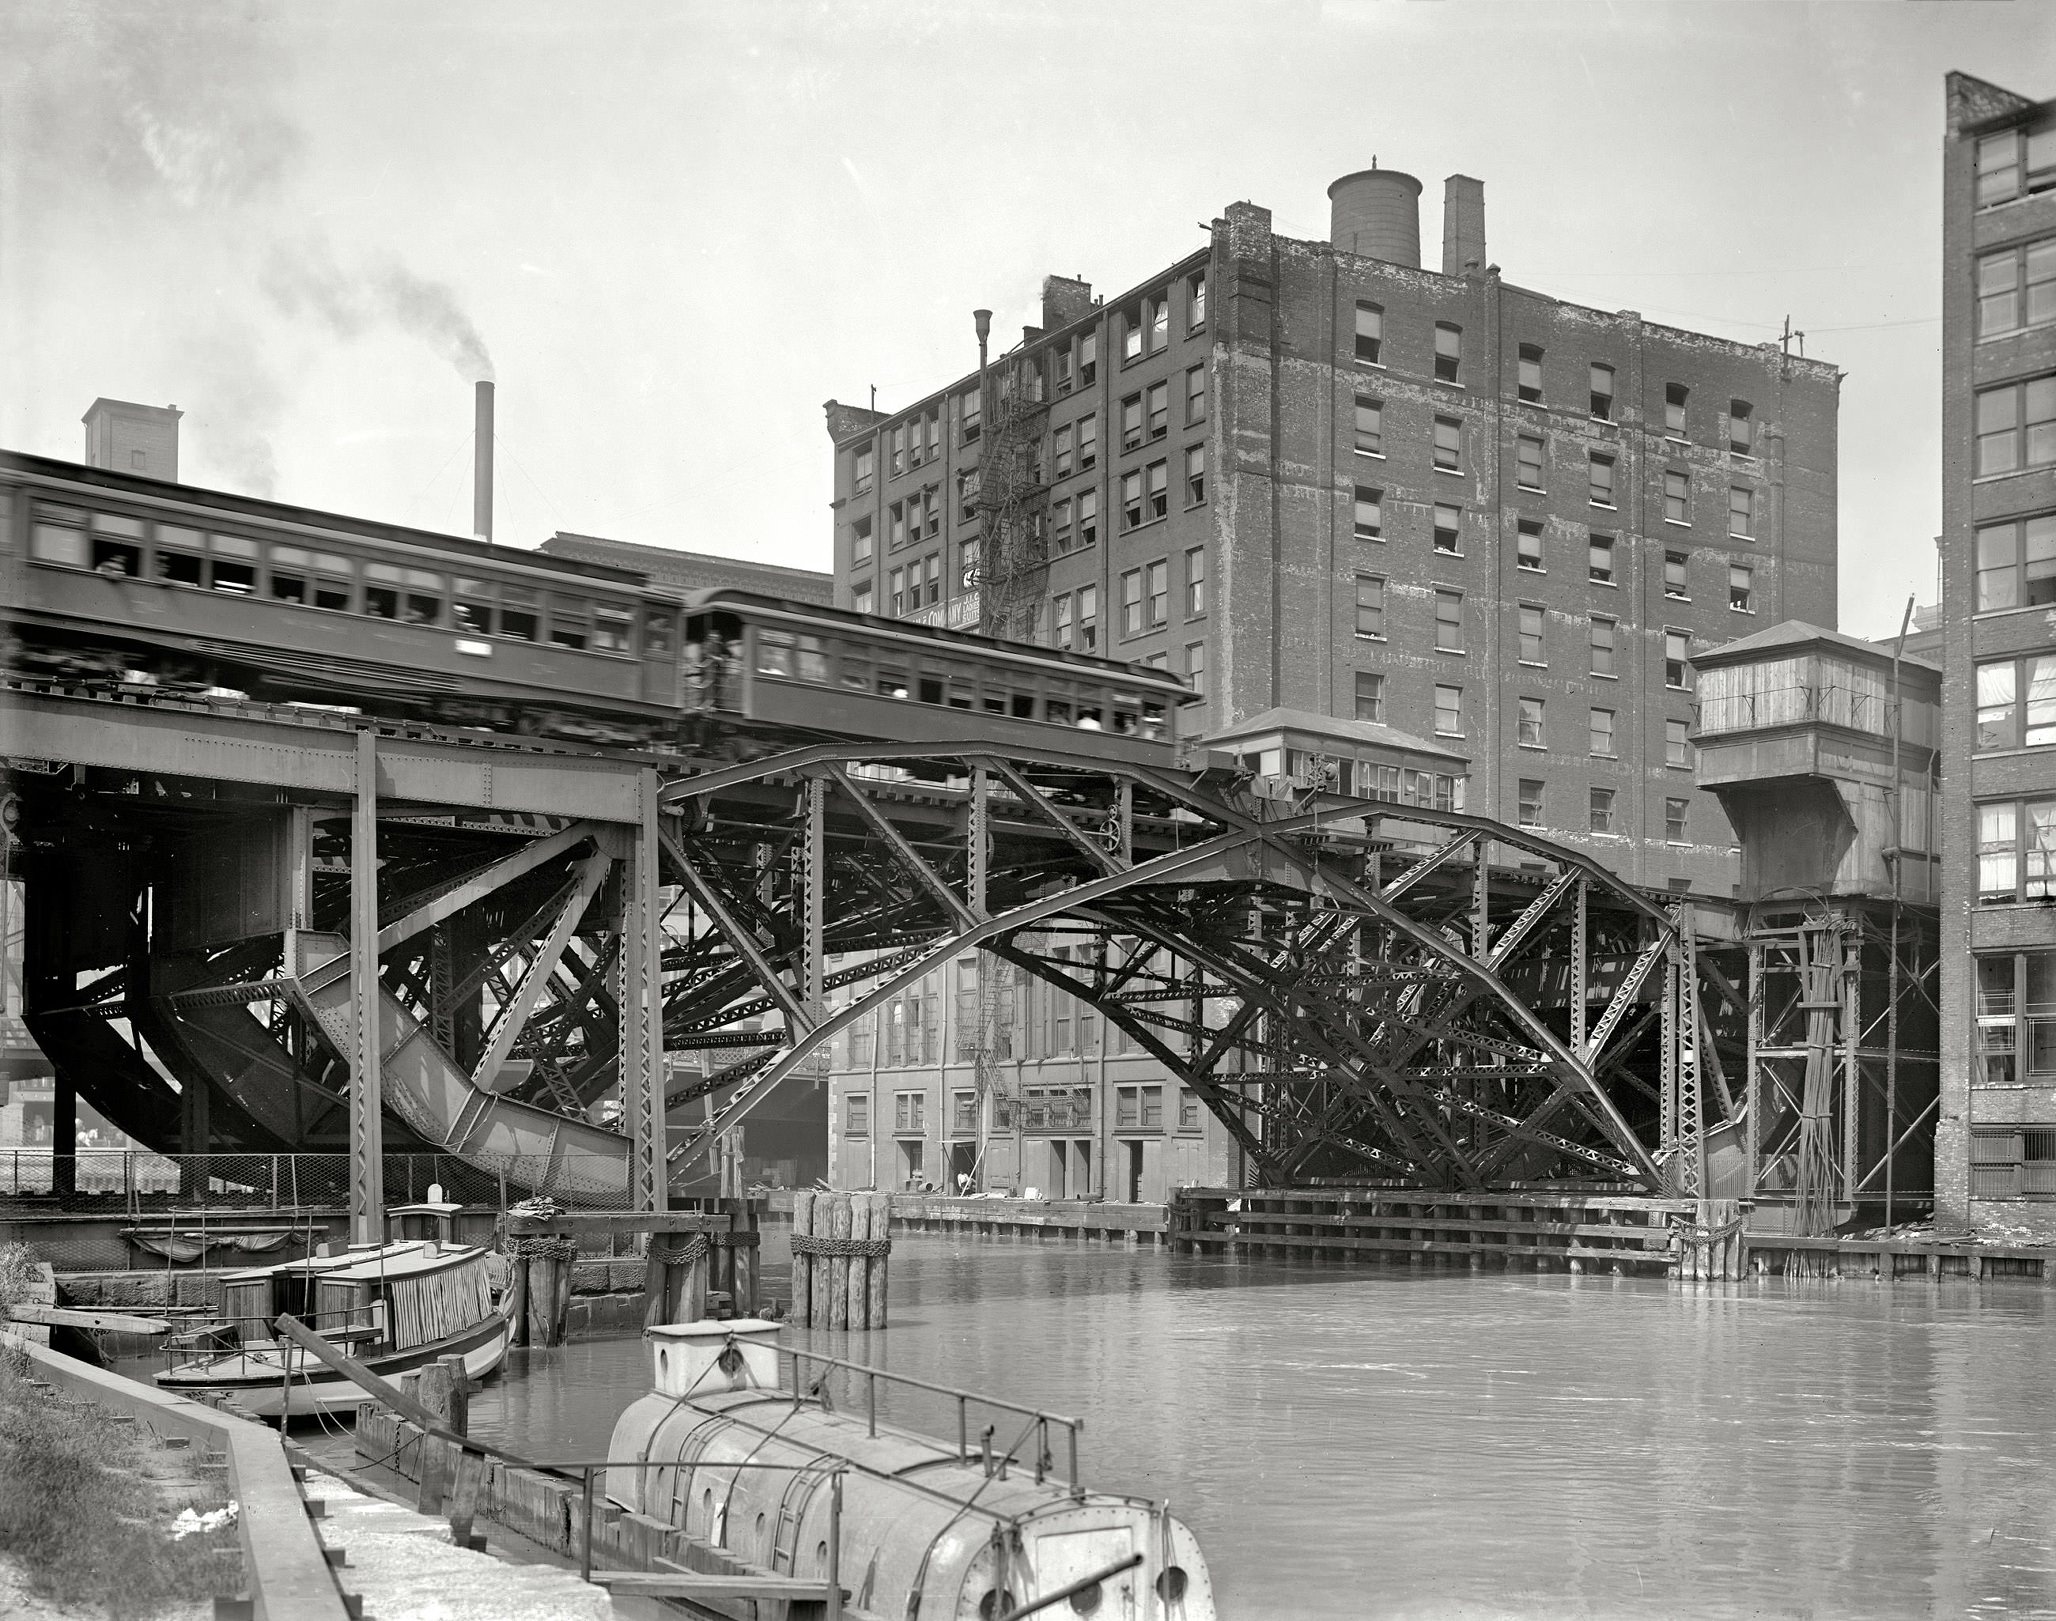 Jackknife Bridge, Chicago RiverChicago, Illinois, circa 1907